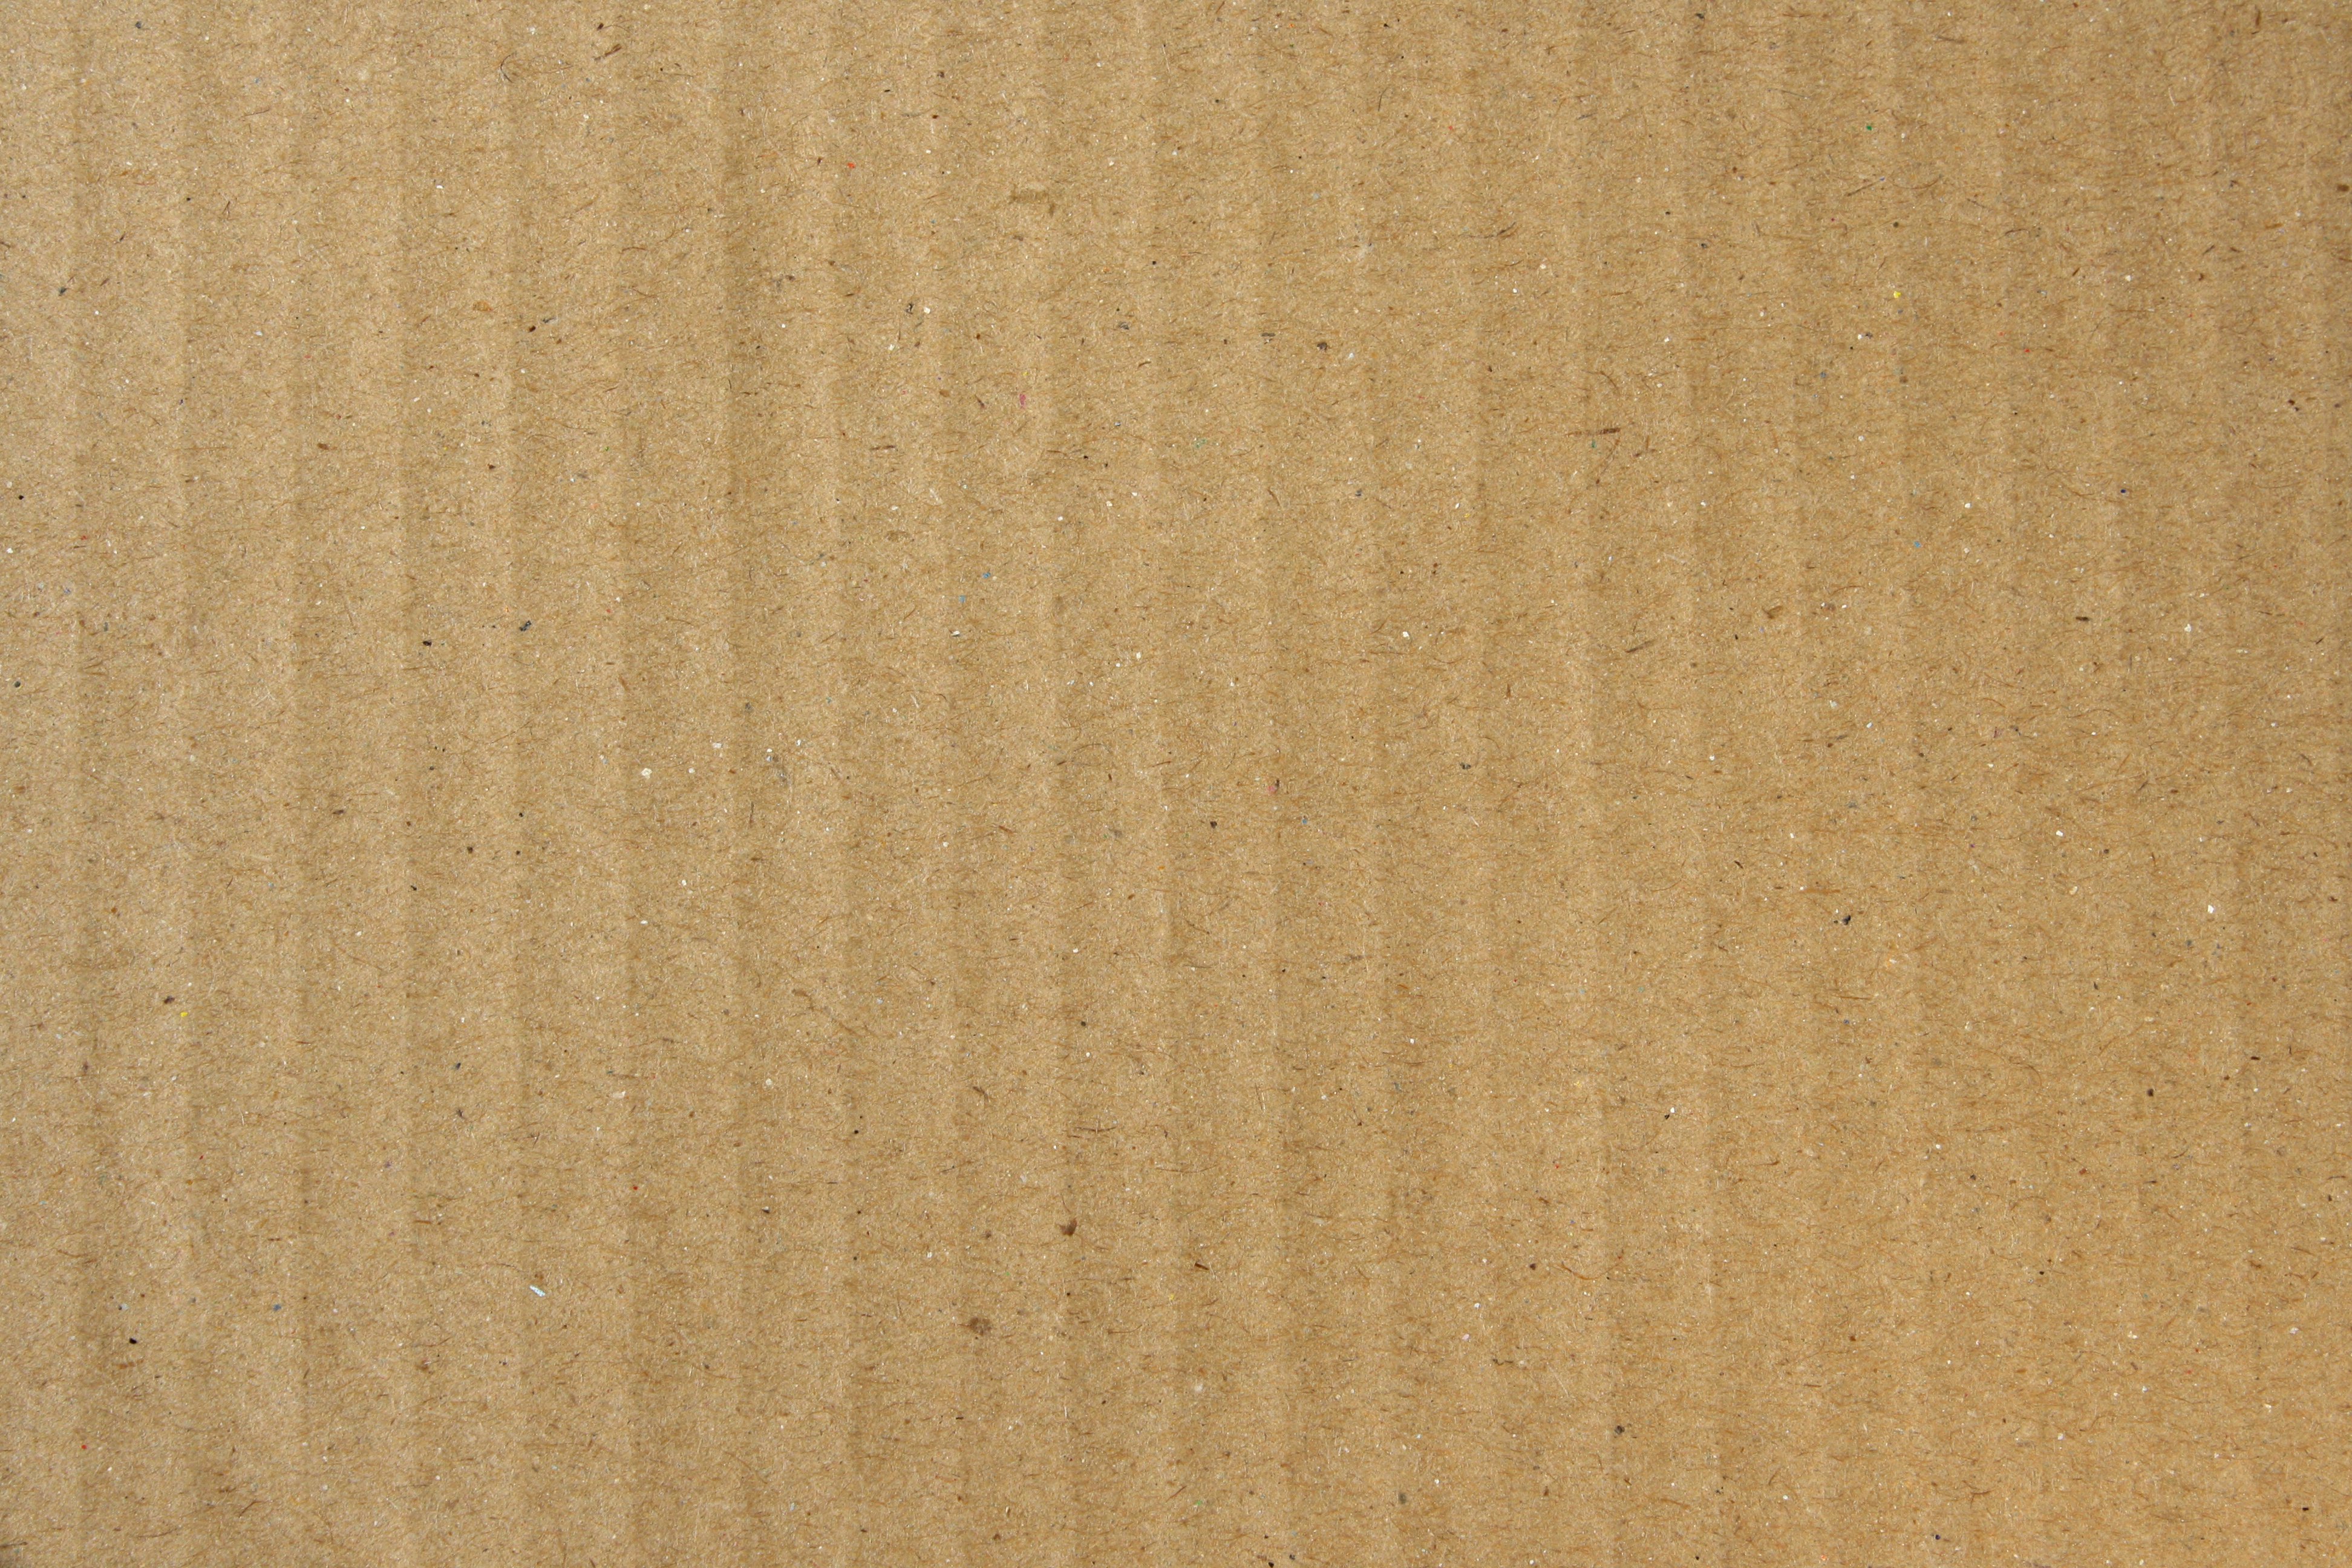 Cardboard Texture Picture | Free Photograph | Photos Public Domain